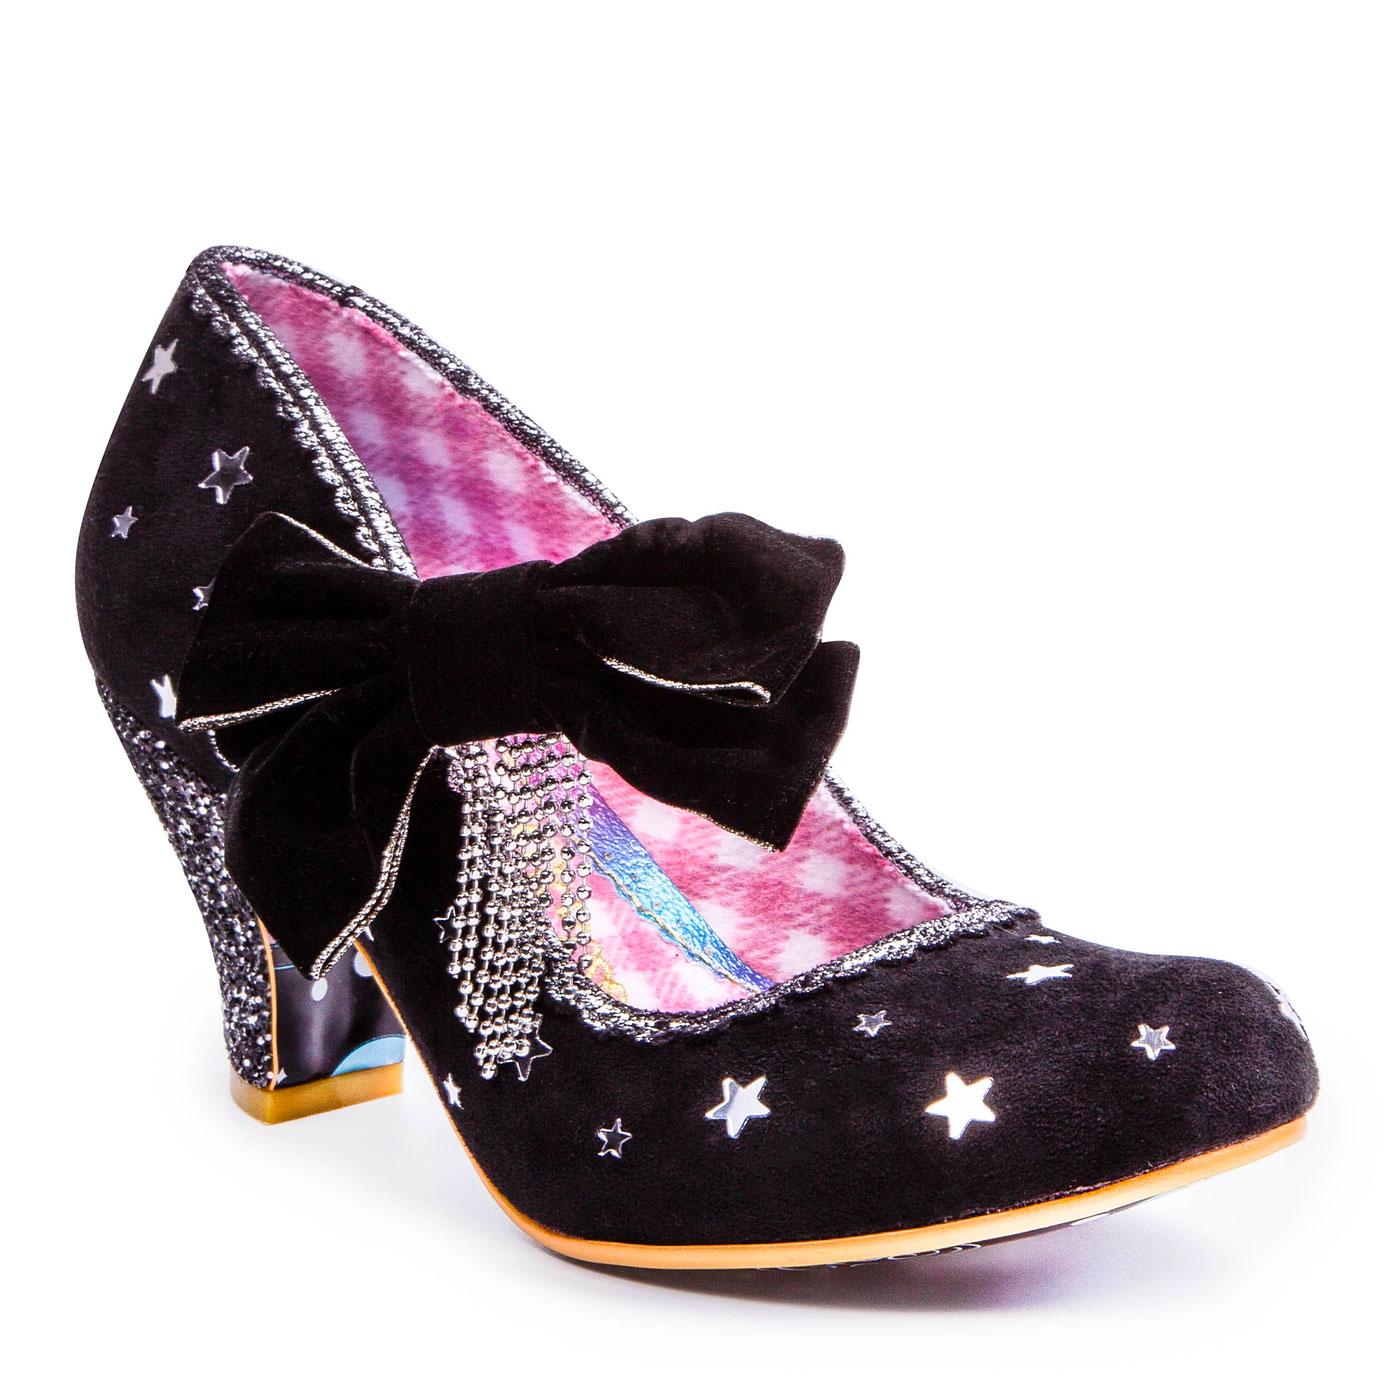 Robin IRREGULAR CHOICE Retro Mary Jane Party Shoes